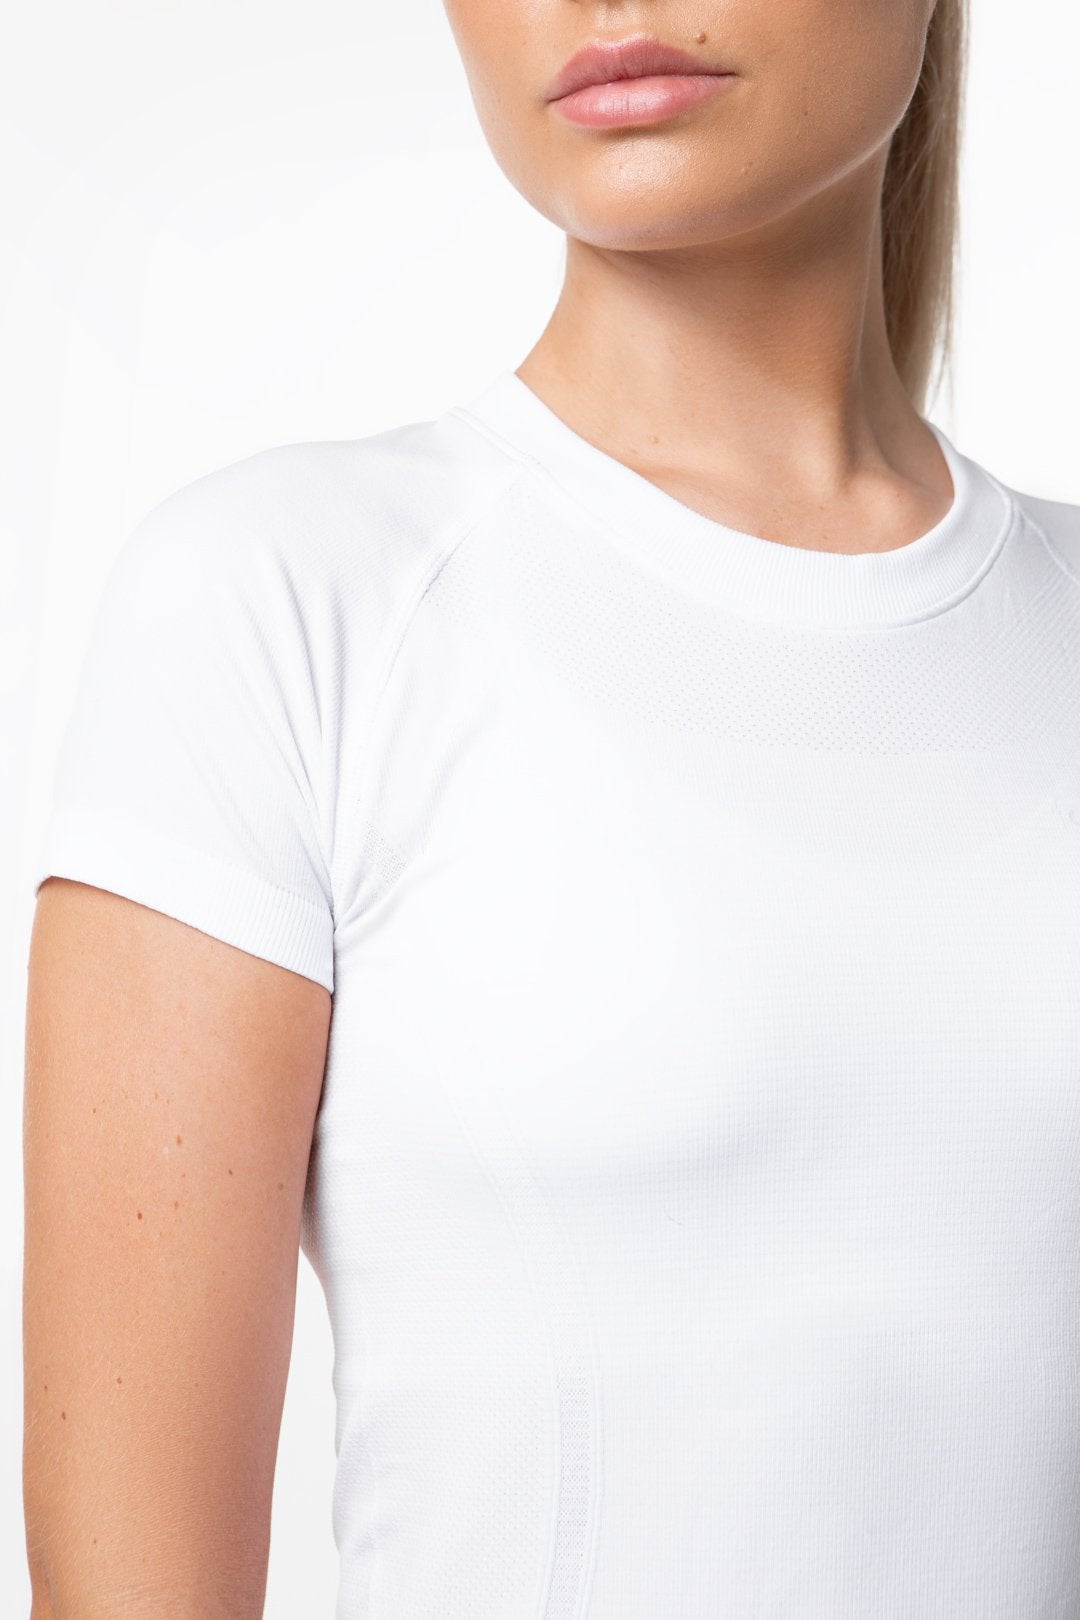 White Tech T-Shirt - for dame - Famme - T-Shirt